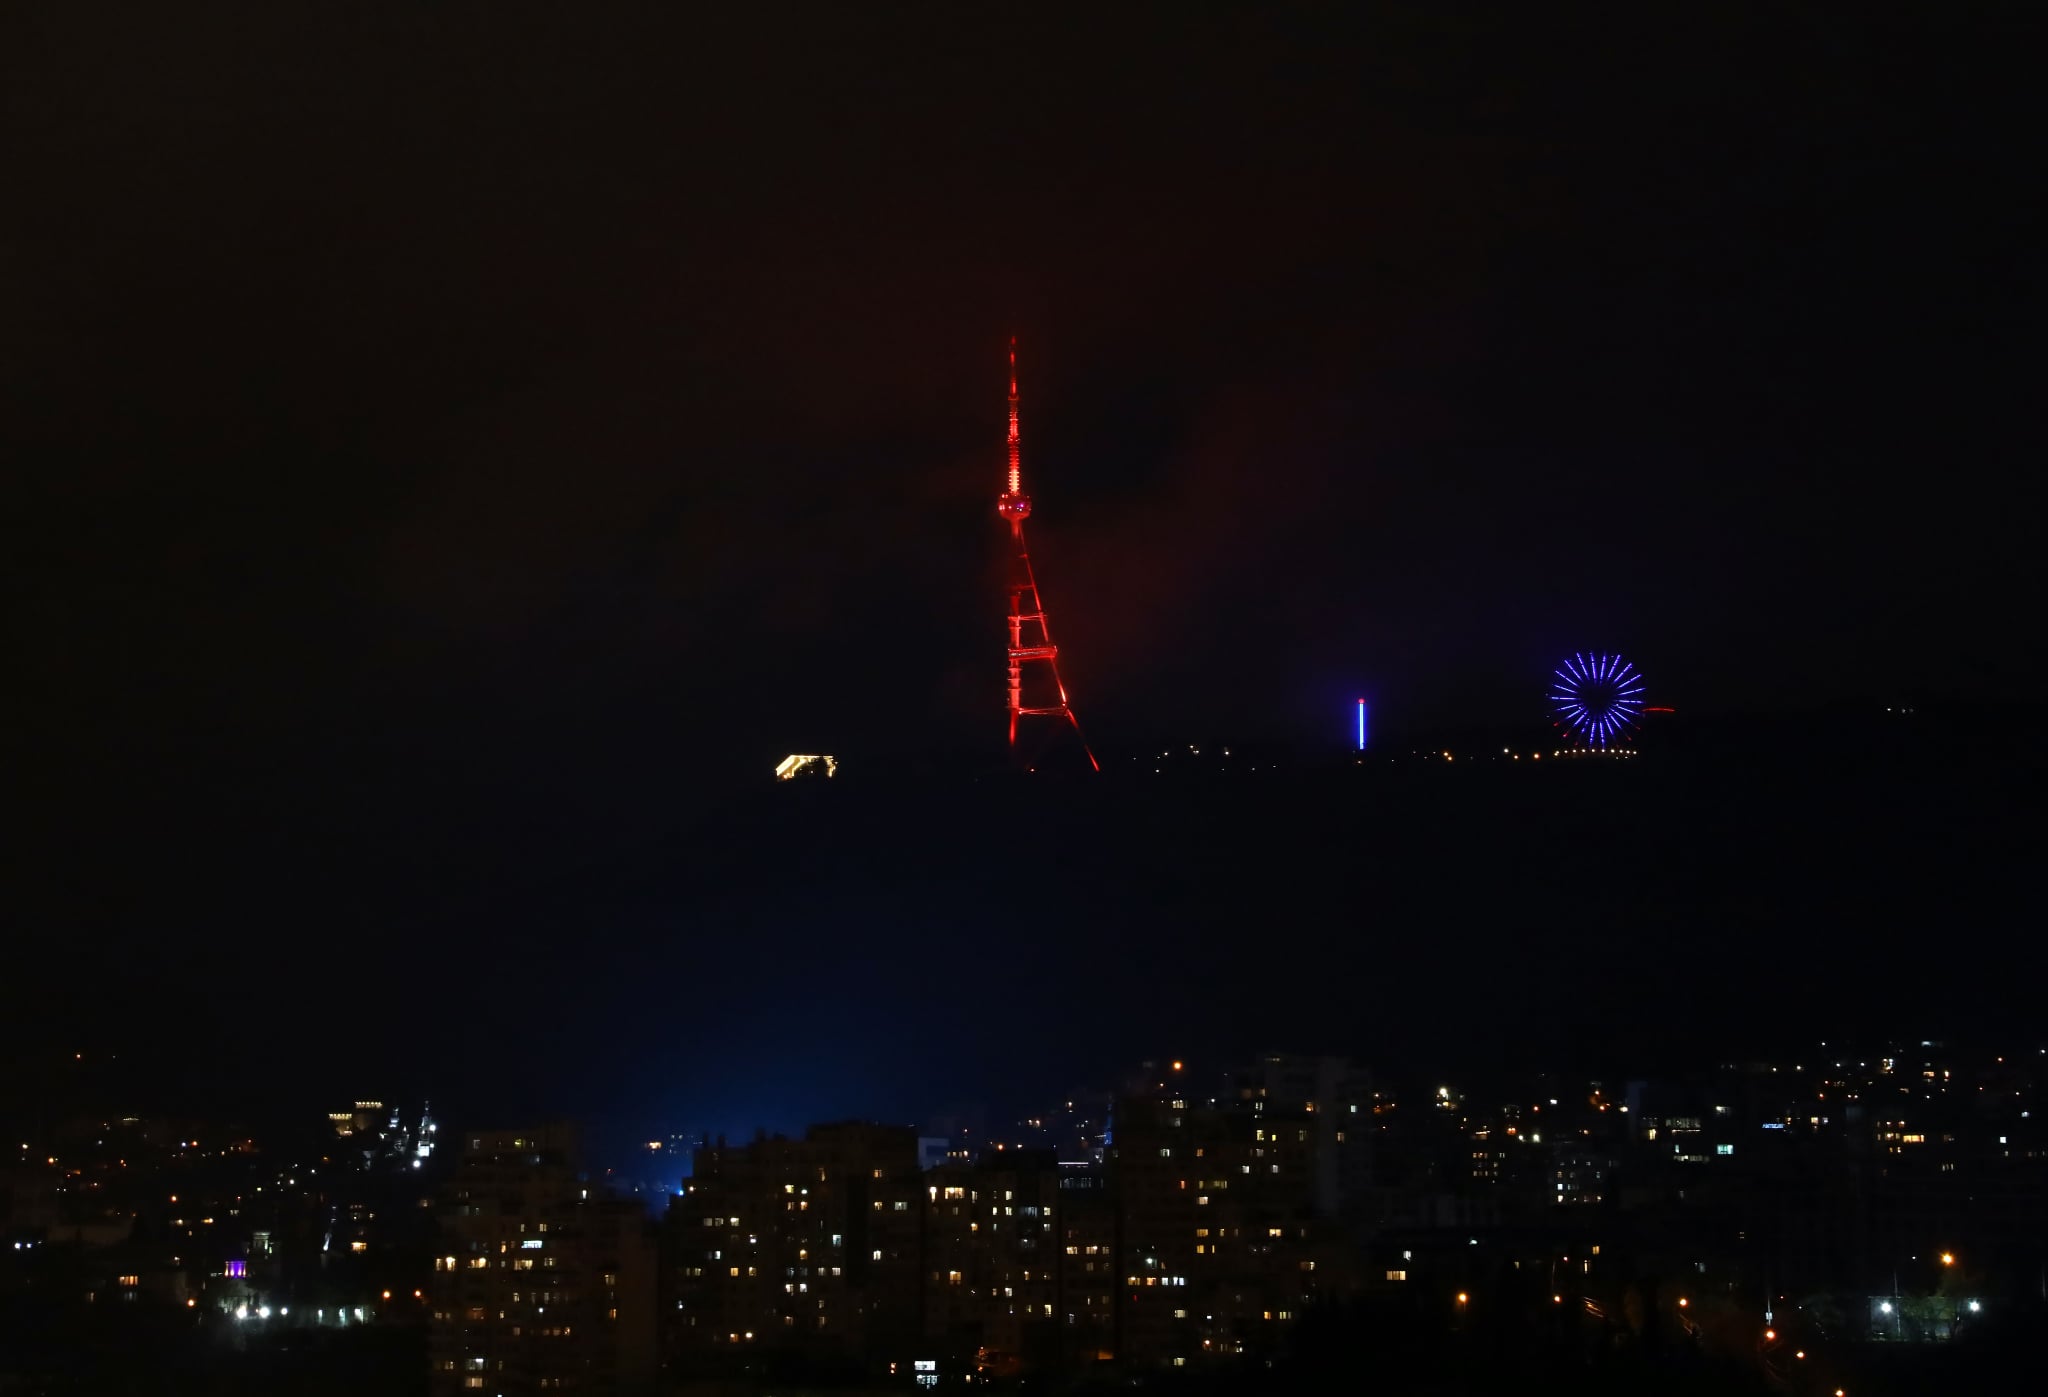 Tbilisi TV Tower lit up in orange